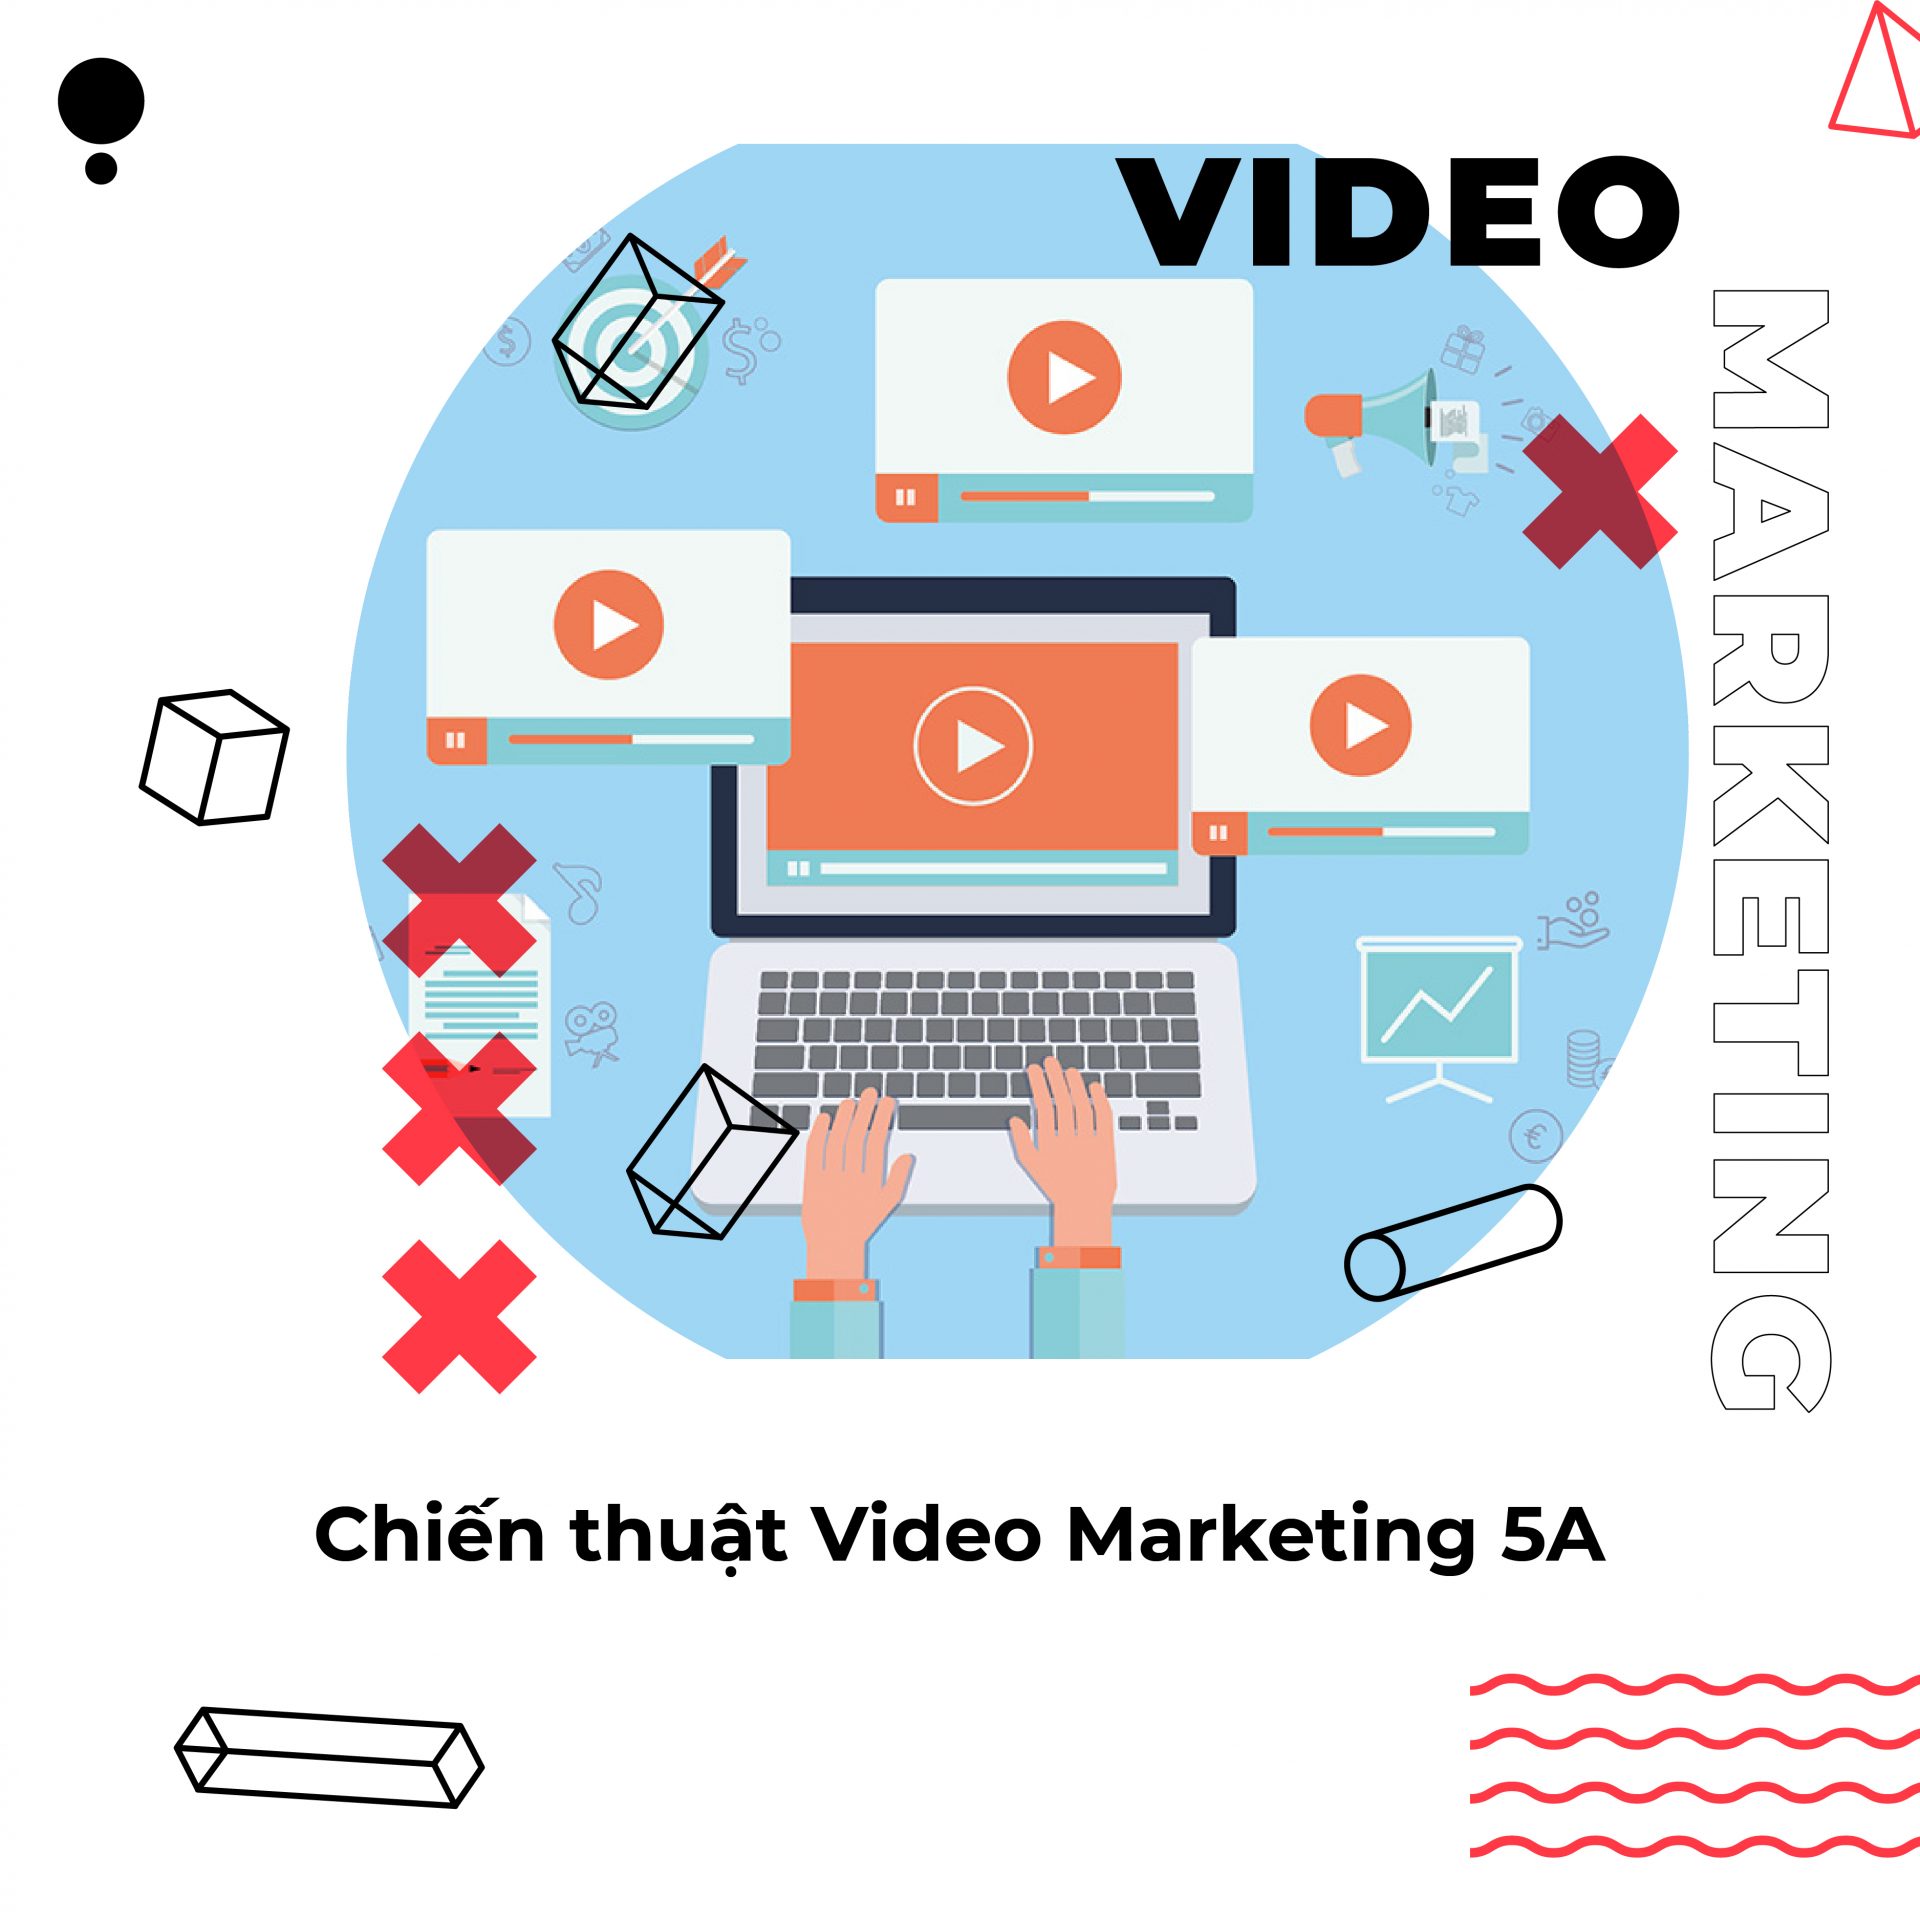 Chiến thuật Video Marketing 5A